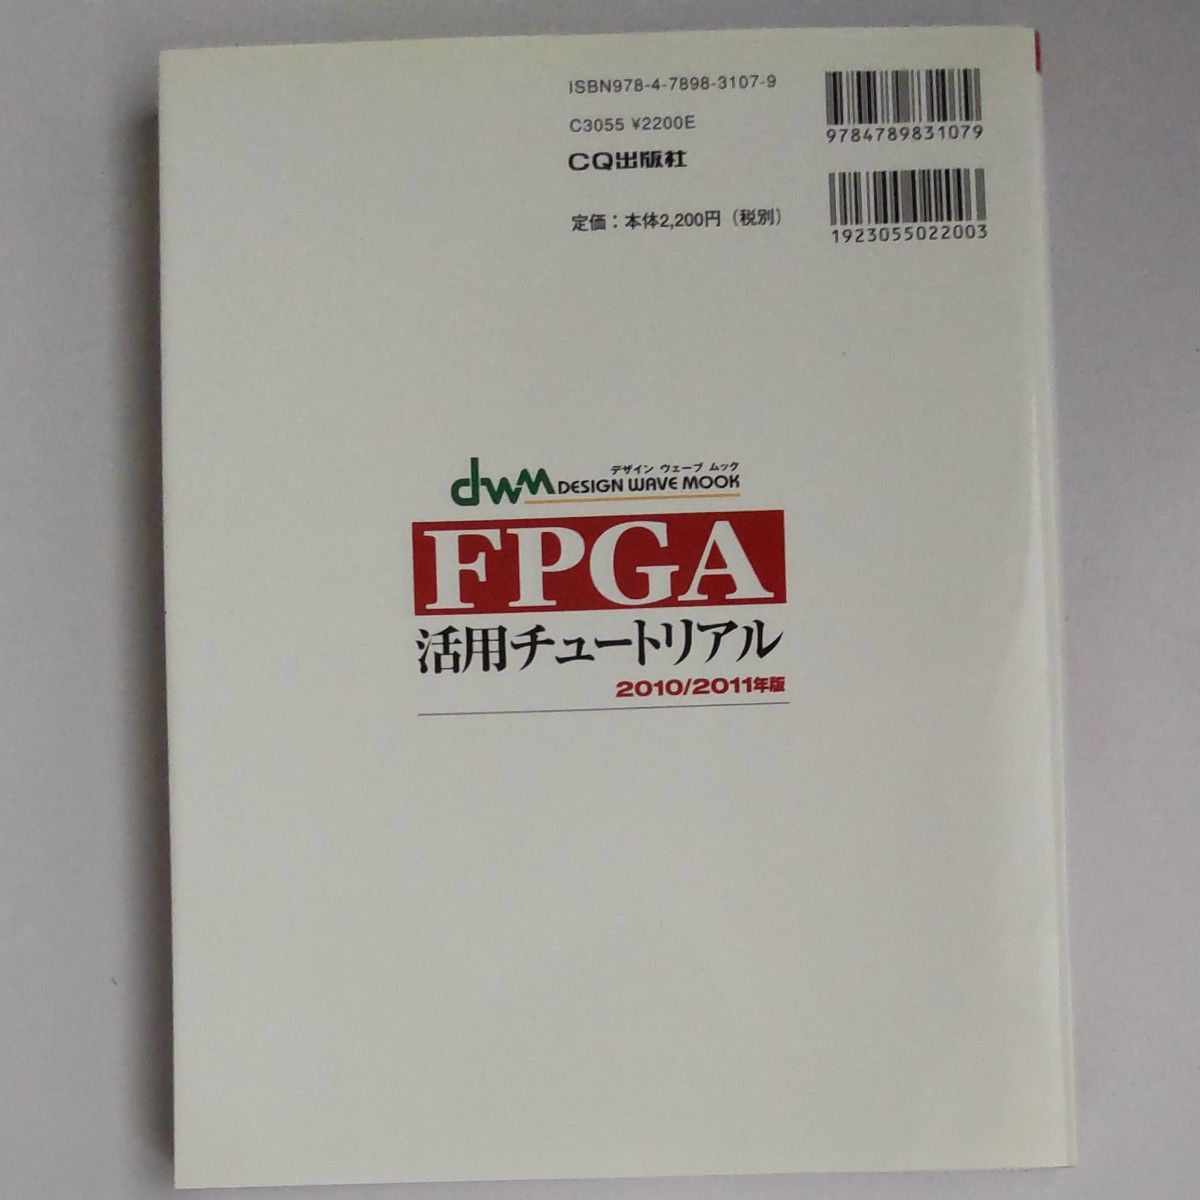 FPGA活用チュートリアル 2008/2009、2010/2011、2012/2013 全3冊セット